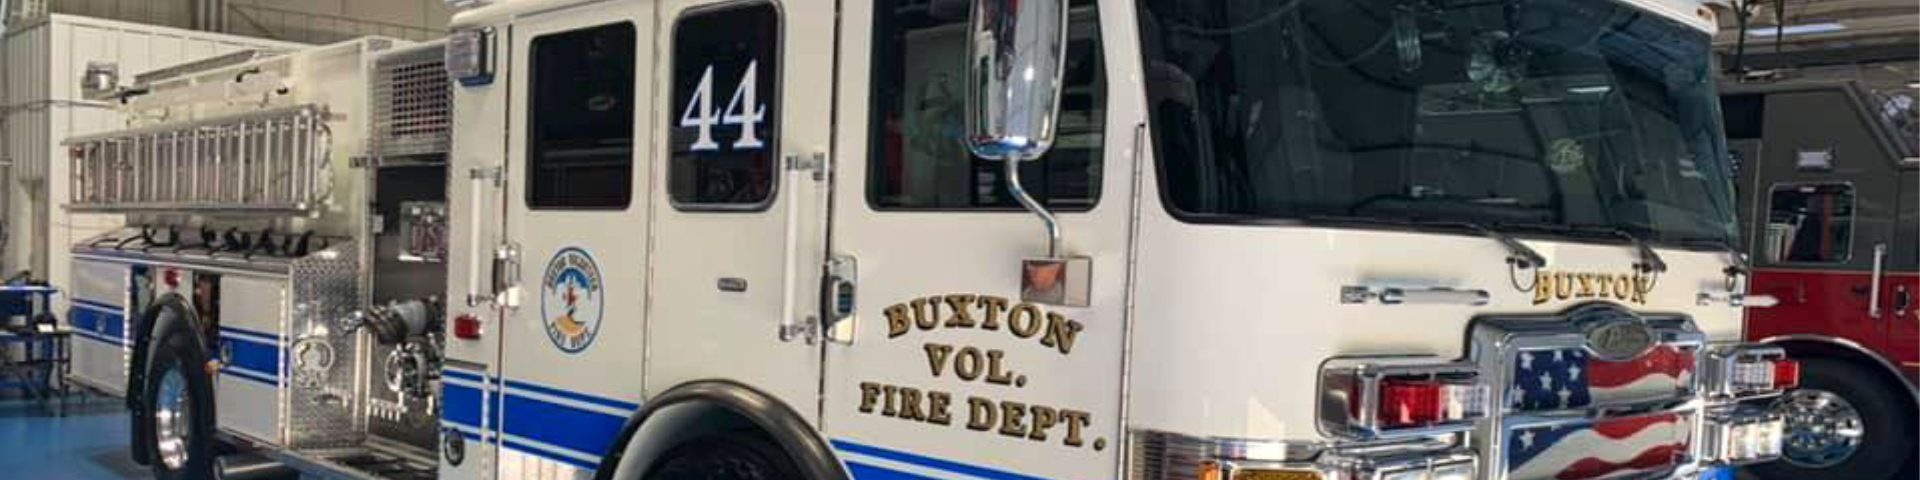 Buxton Volunteer Fire Department